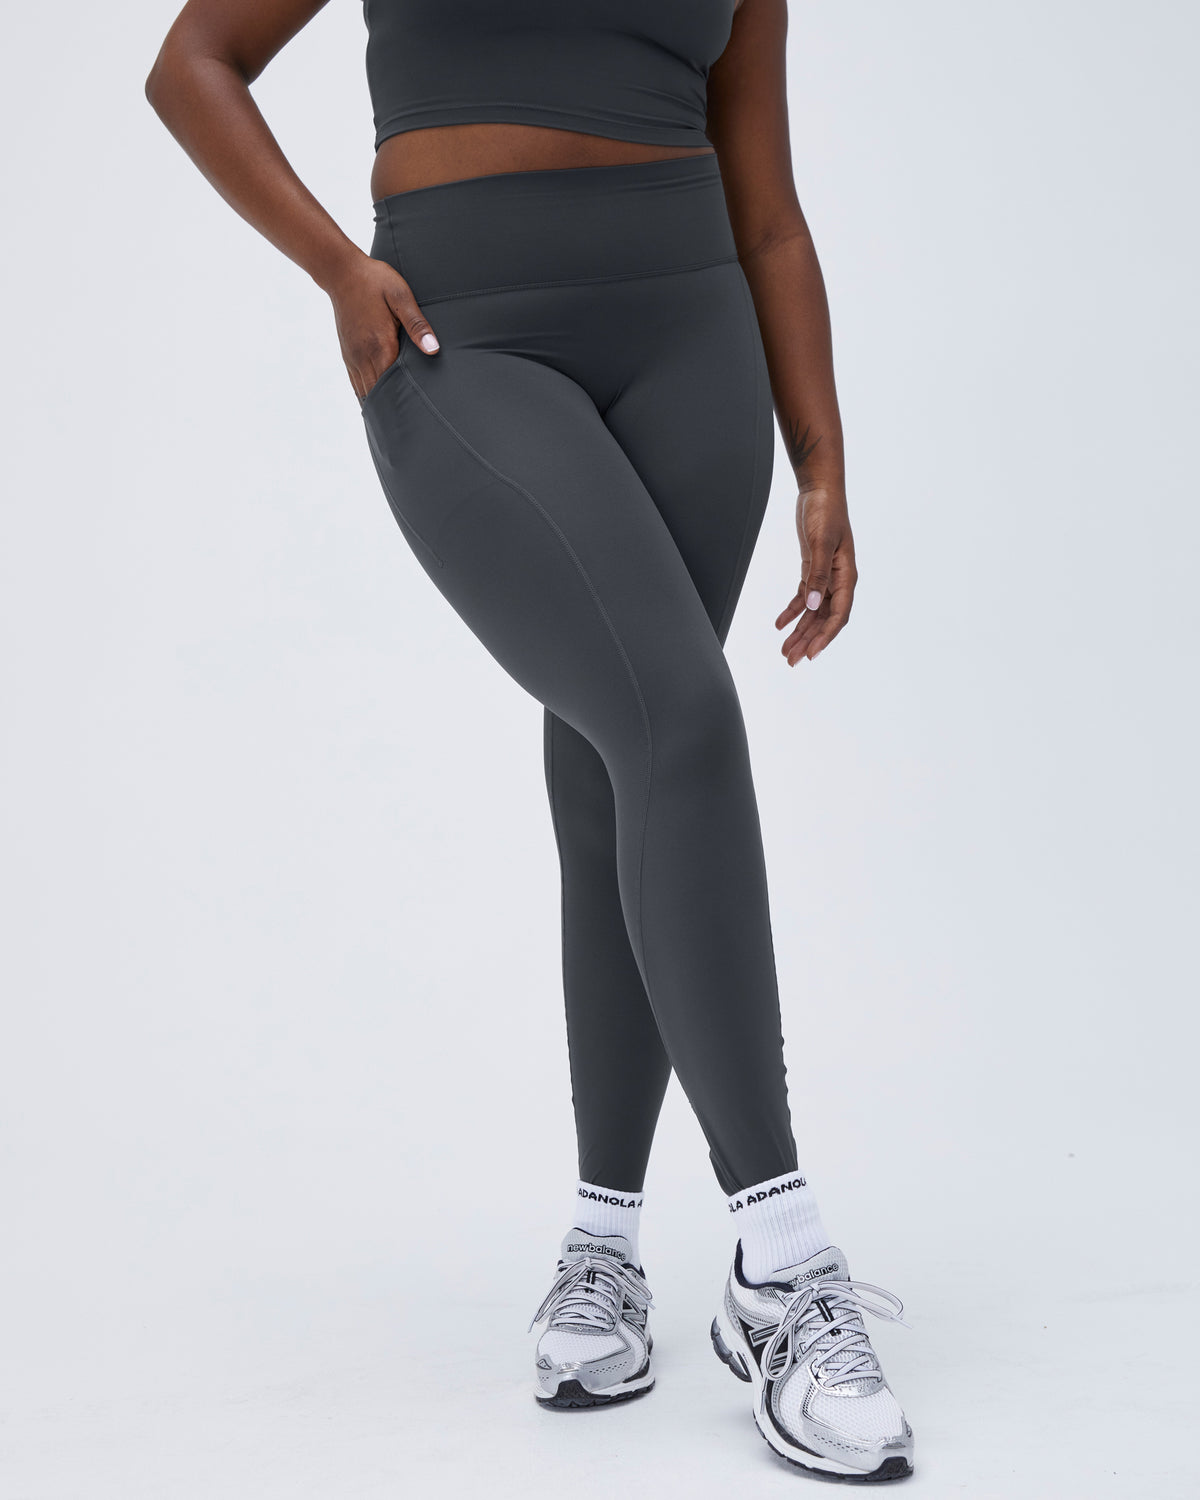 Women's Ultimate Gym Leggings - Graphite Grey